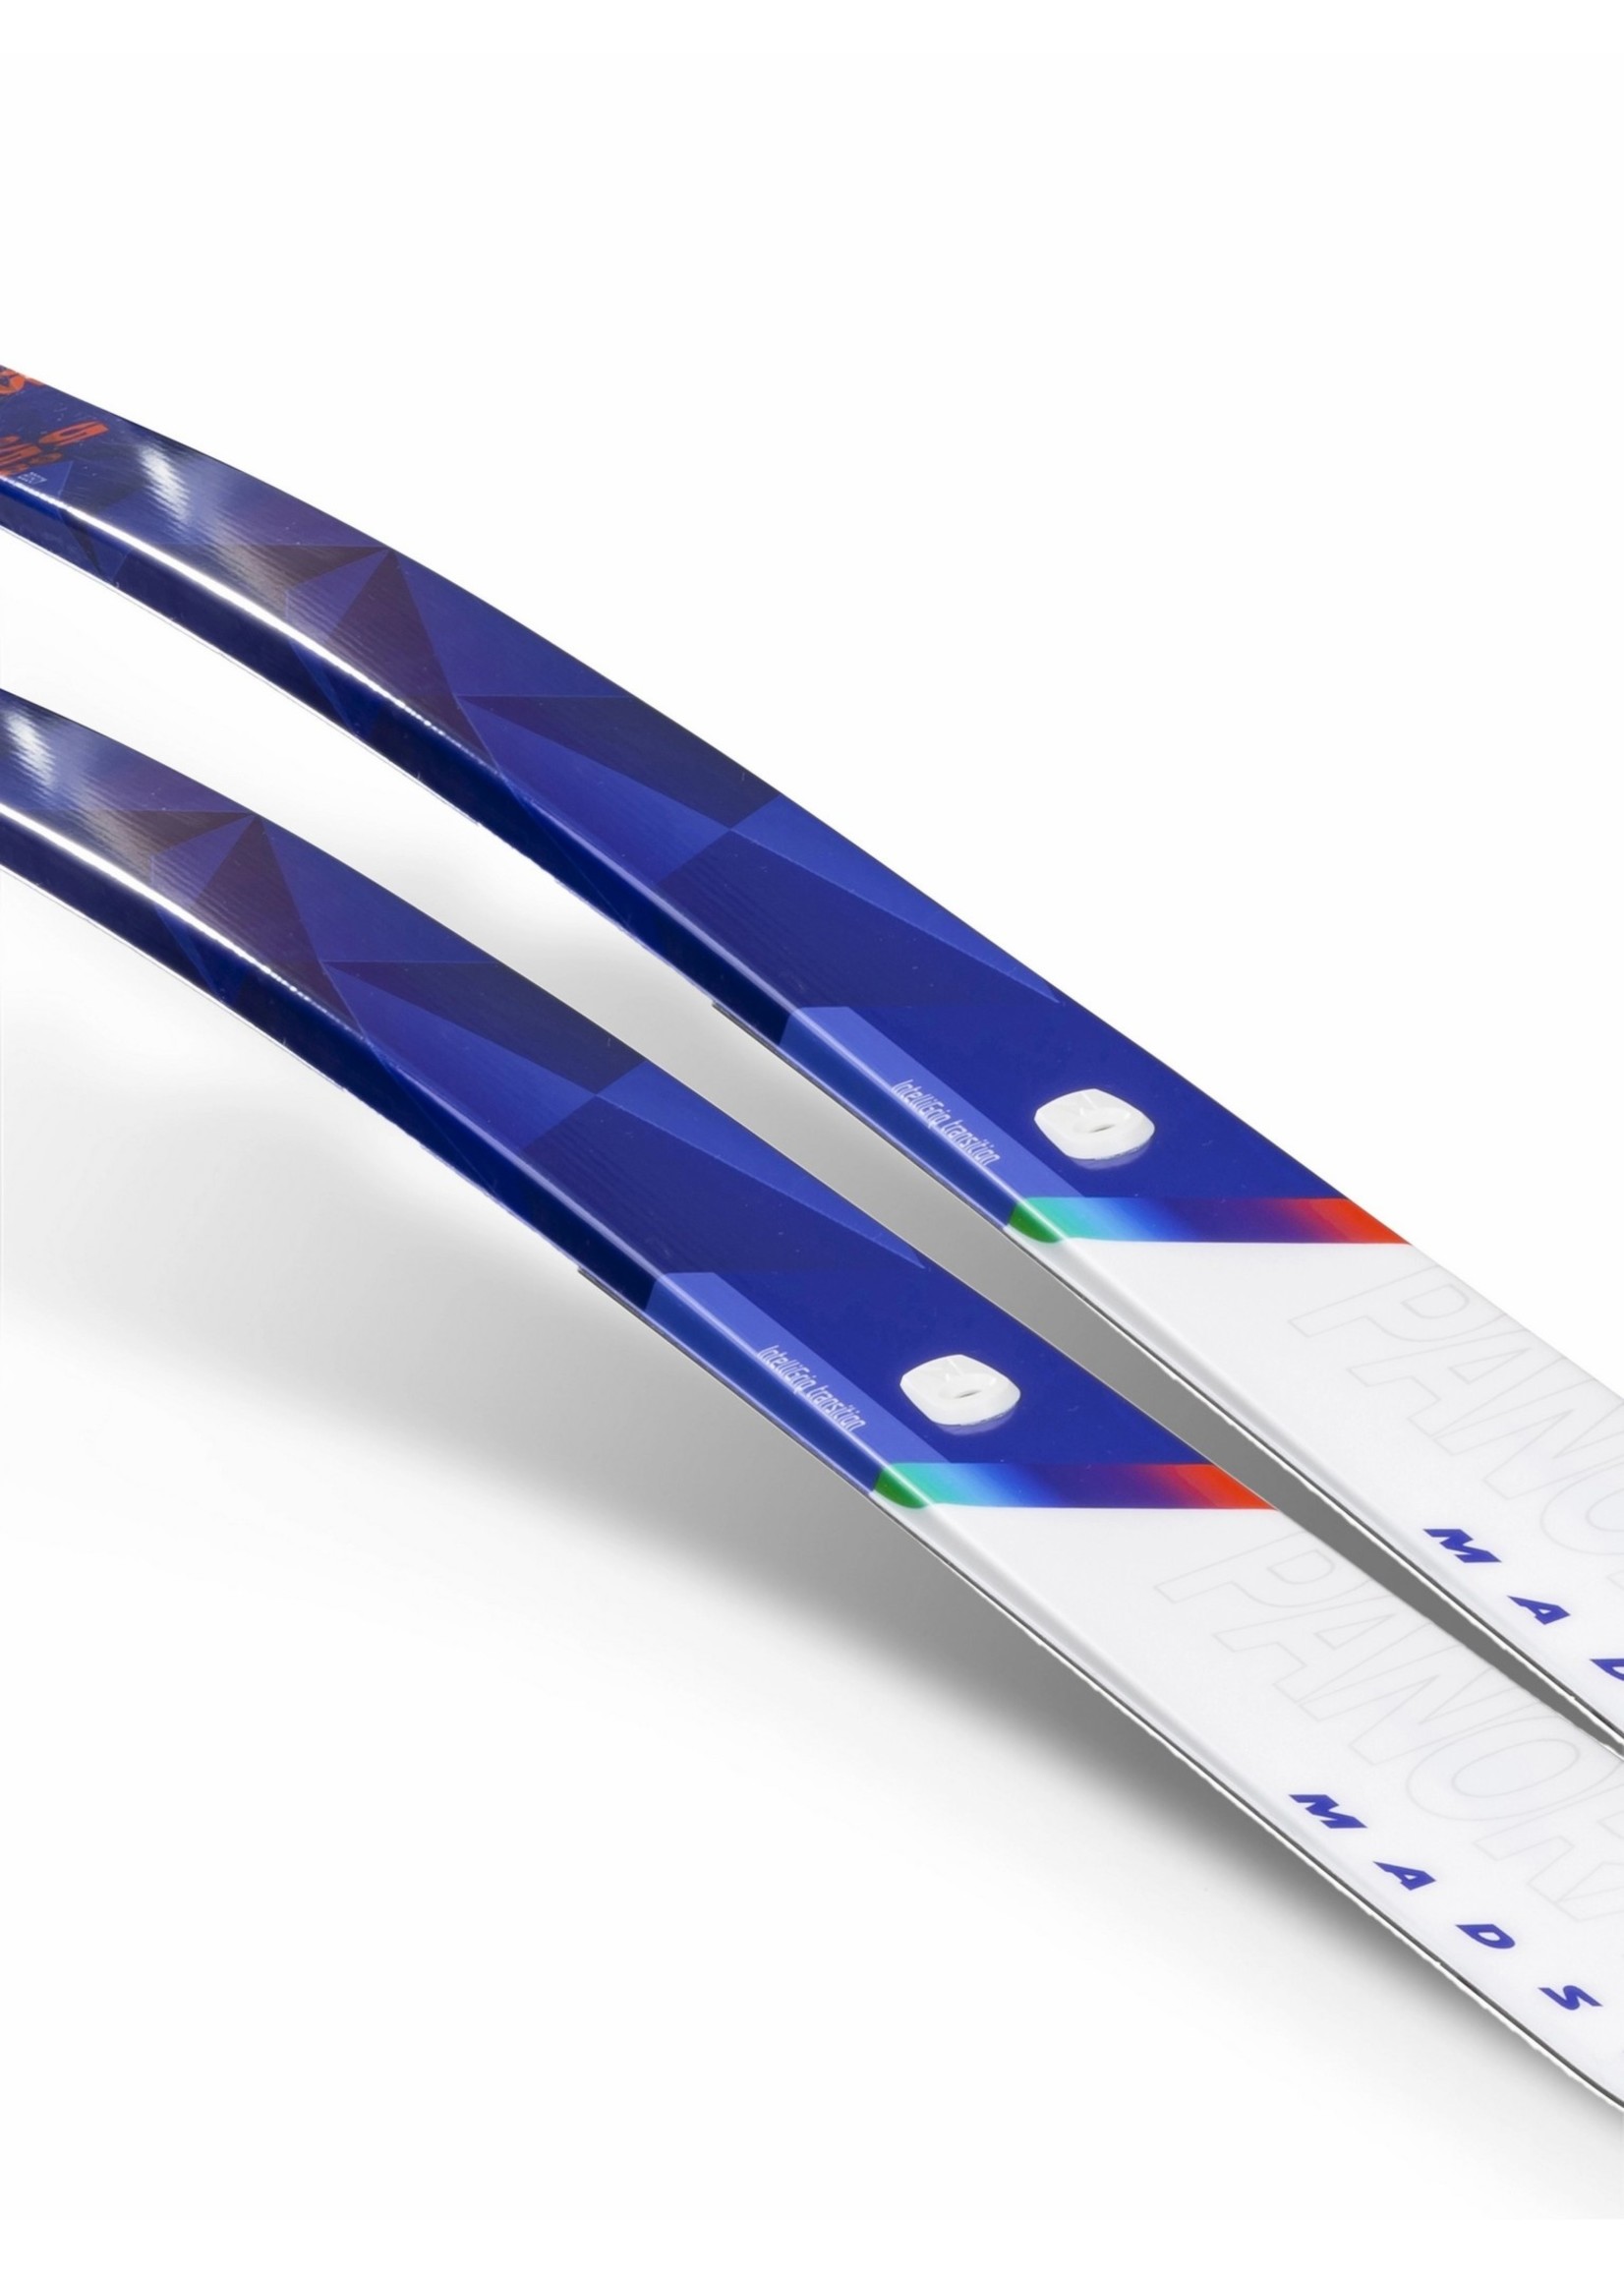 Madshus Skis back-country Panorama M55 Intelligrip Transition